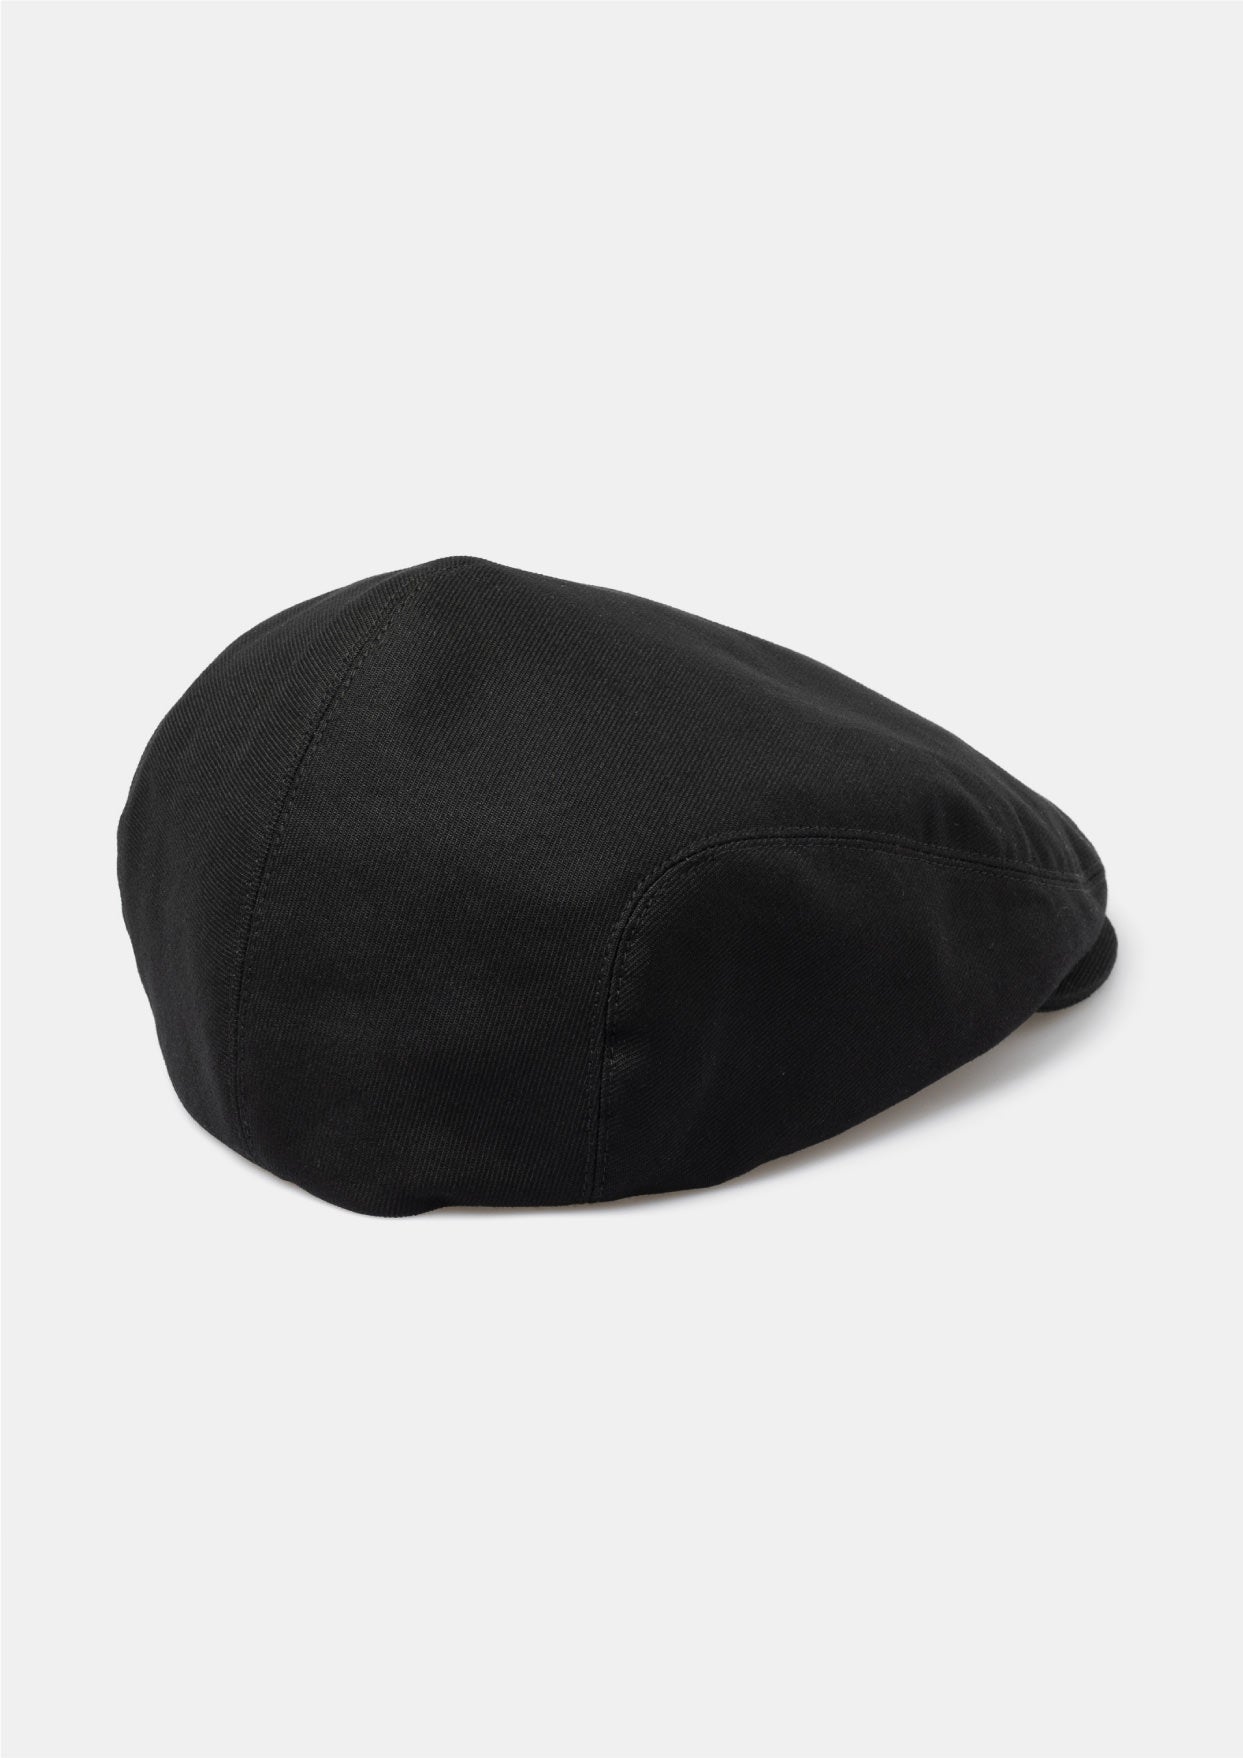 UNNAMED HEADWEAR ハンチング casquette - ハンチング/ベレー帽